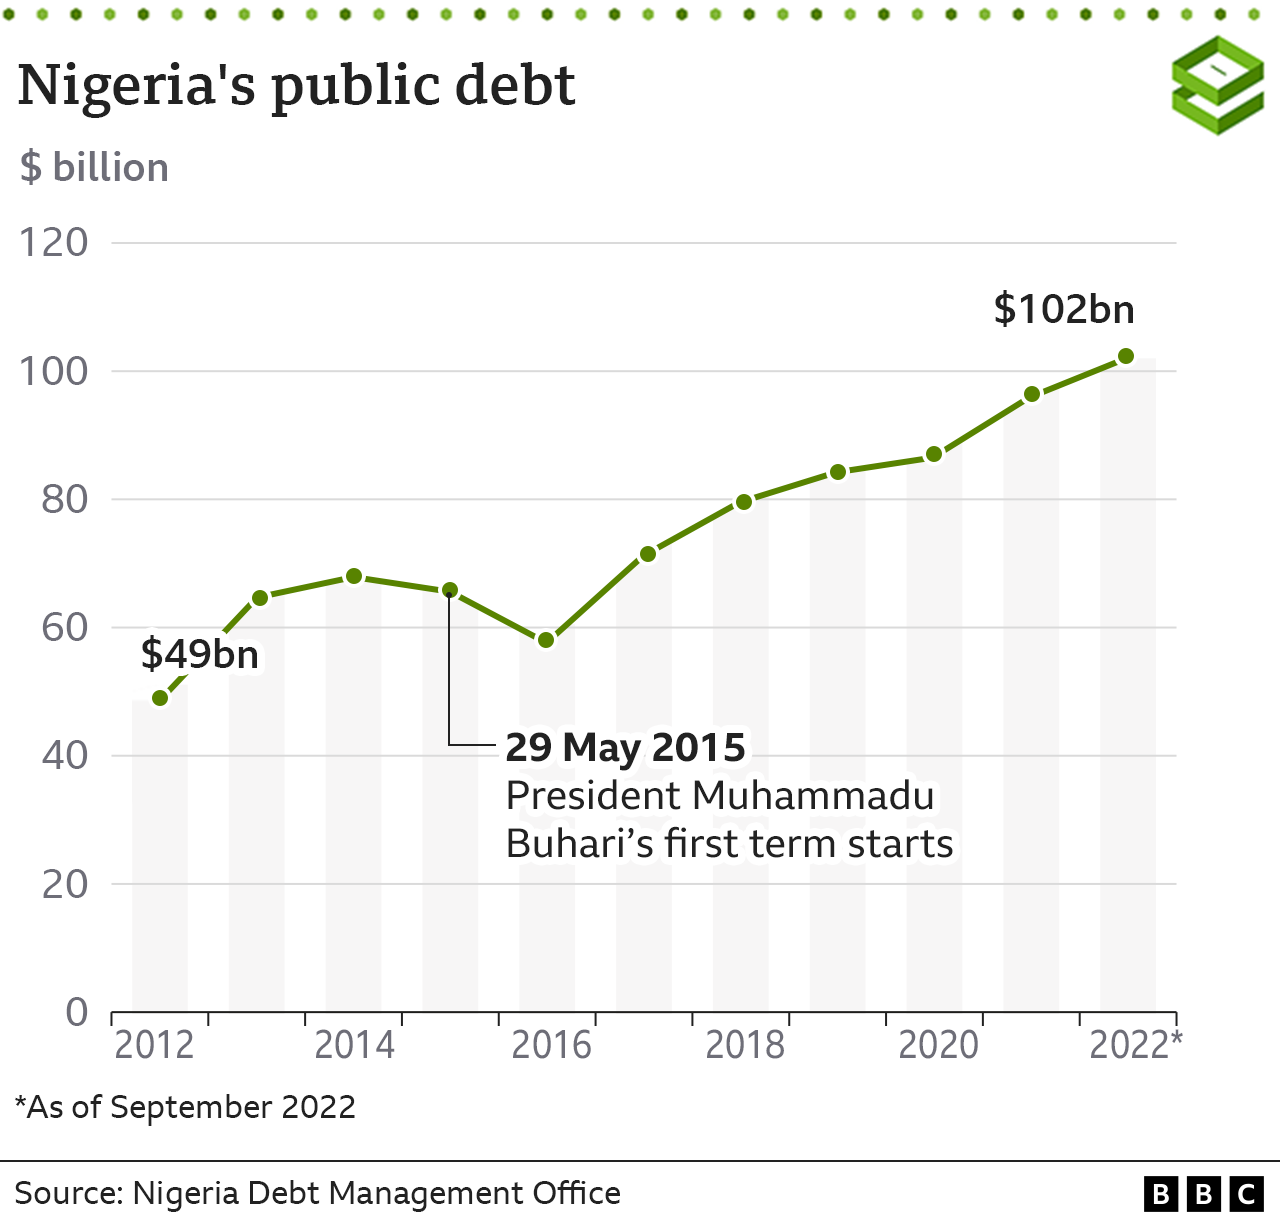 Graph of Nigeria's public debt over time